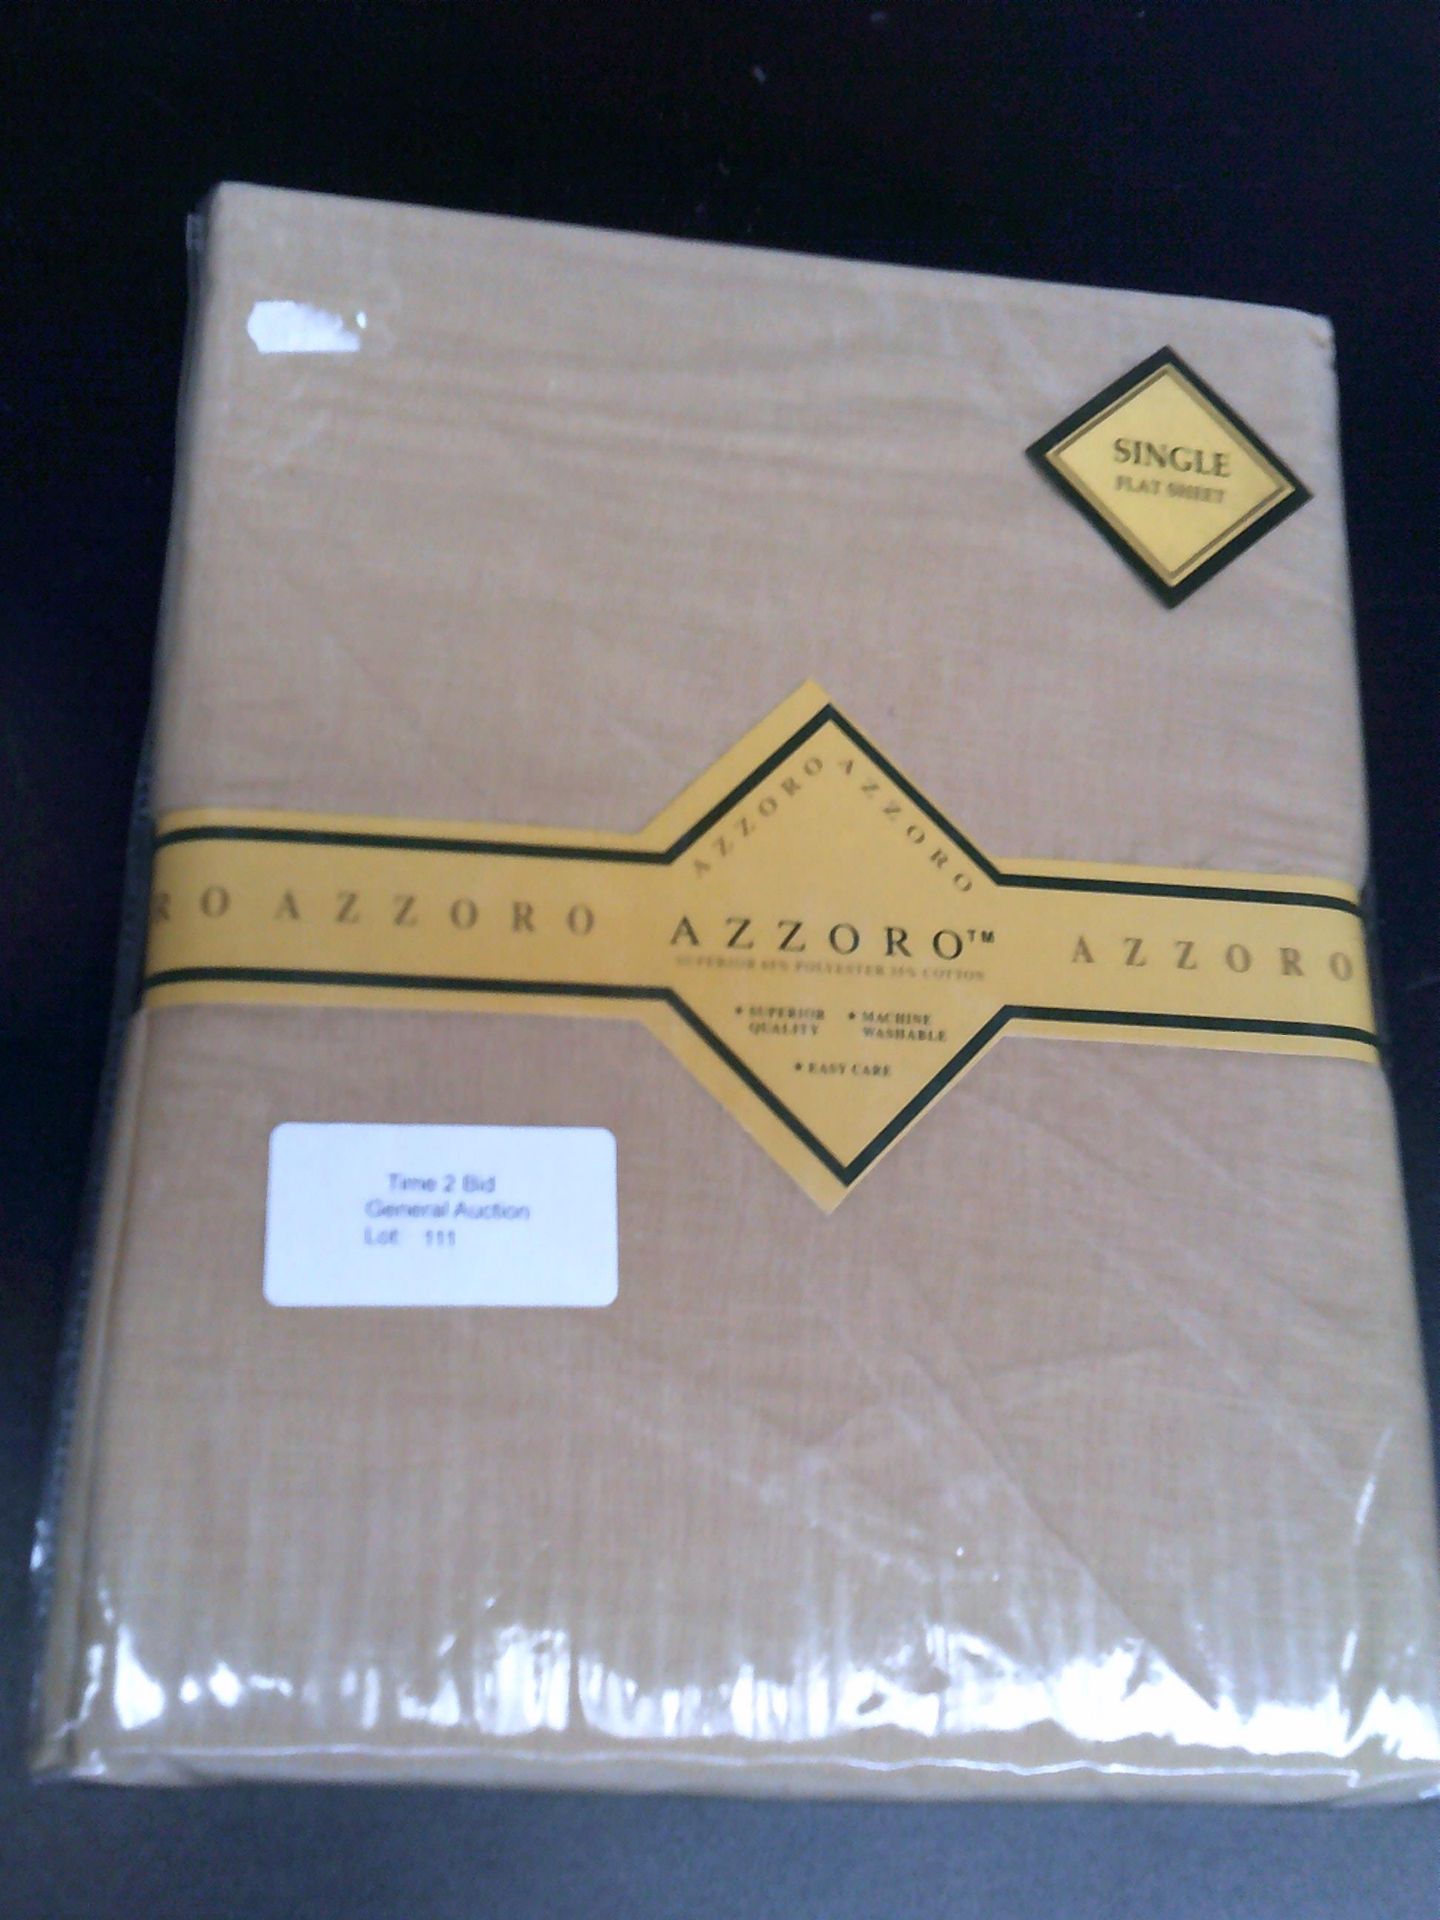 Azzoro single flat sheet (Delivery Band A)